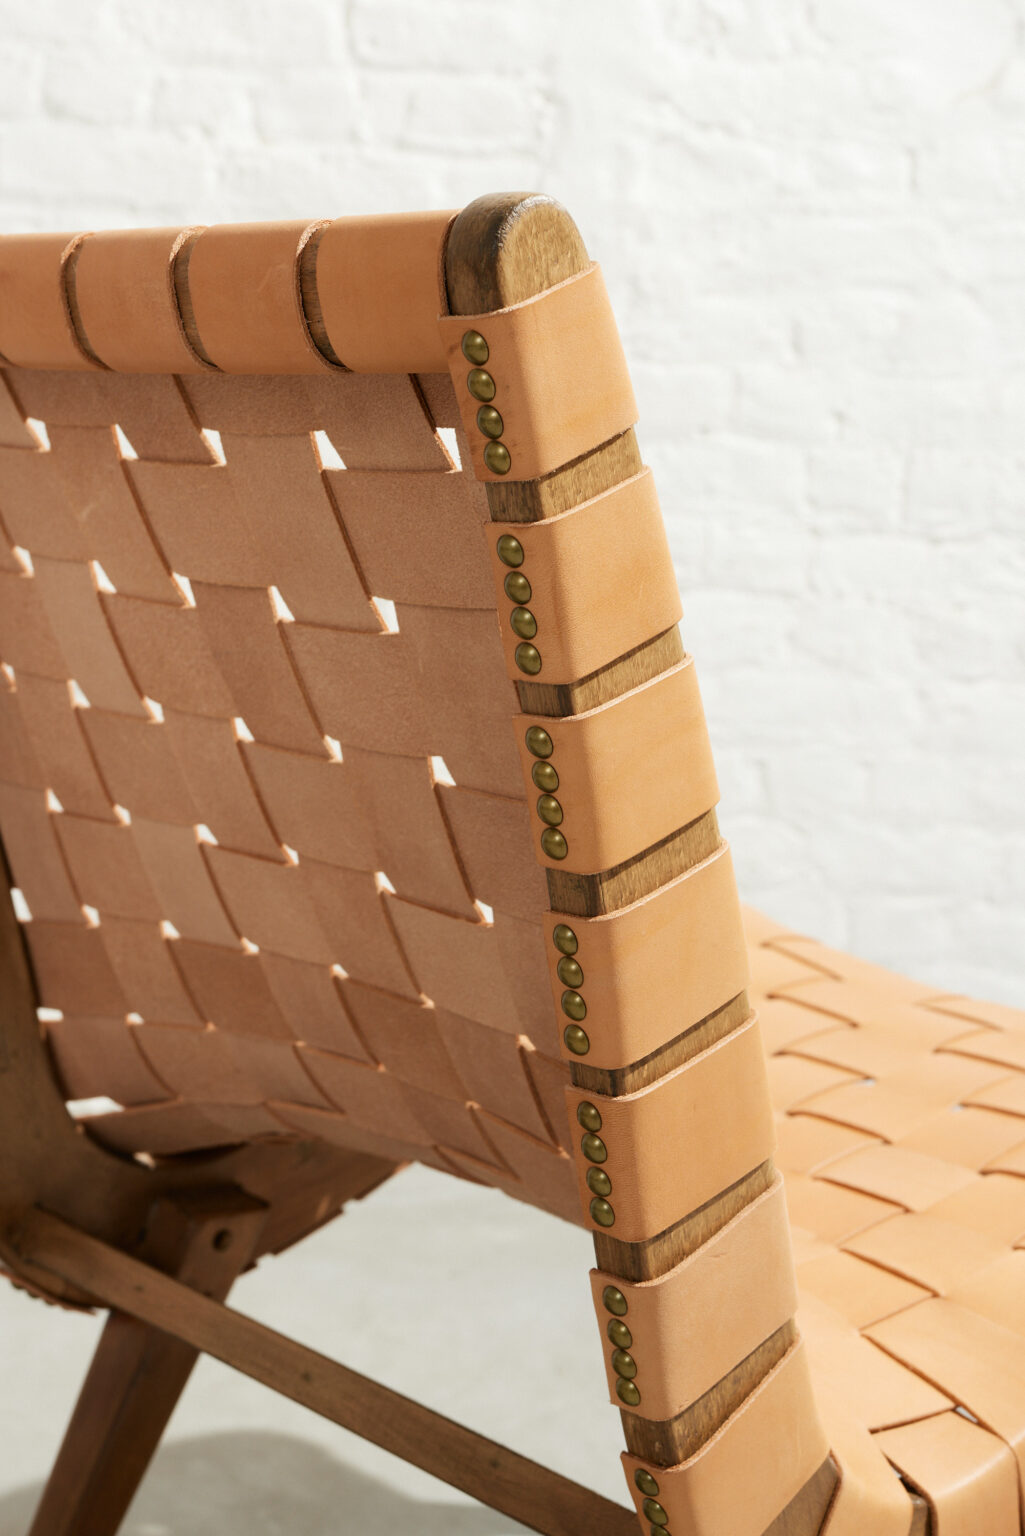 Jens Risom "No. 654" Lounge Chairs